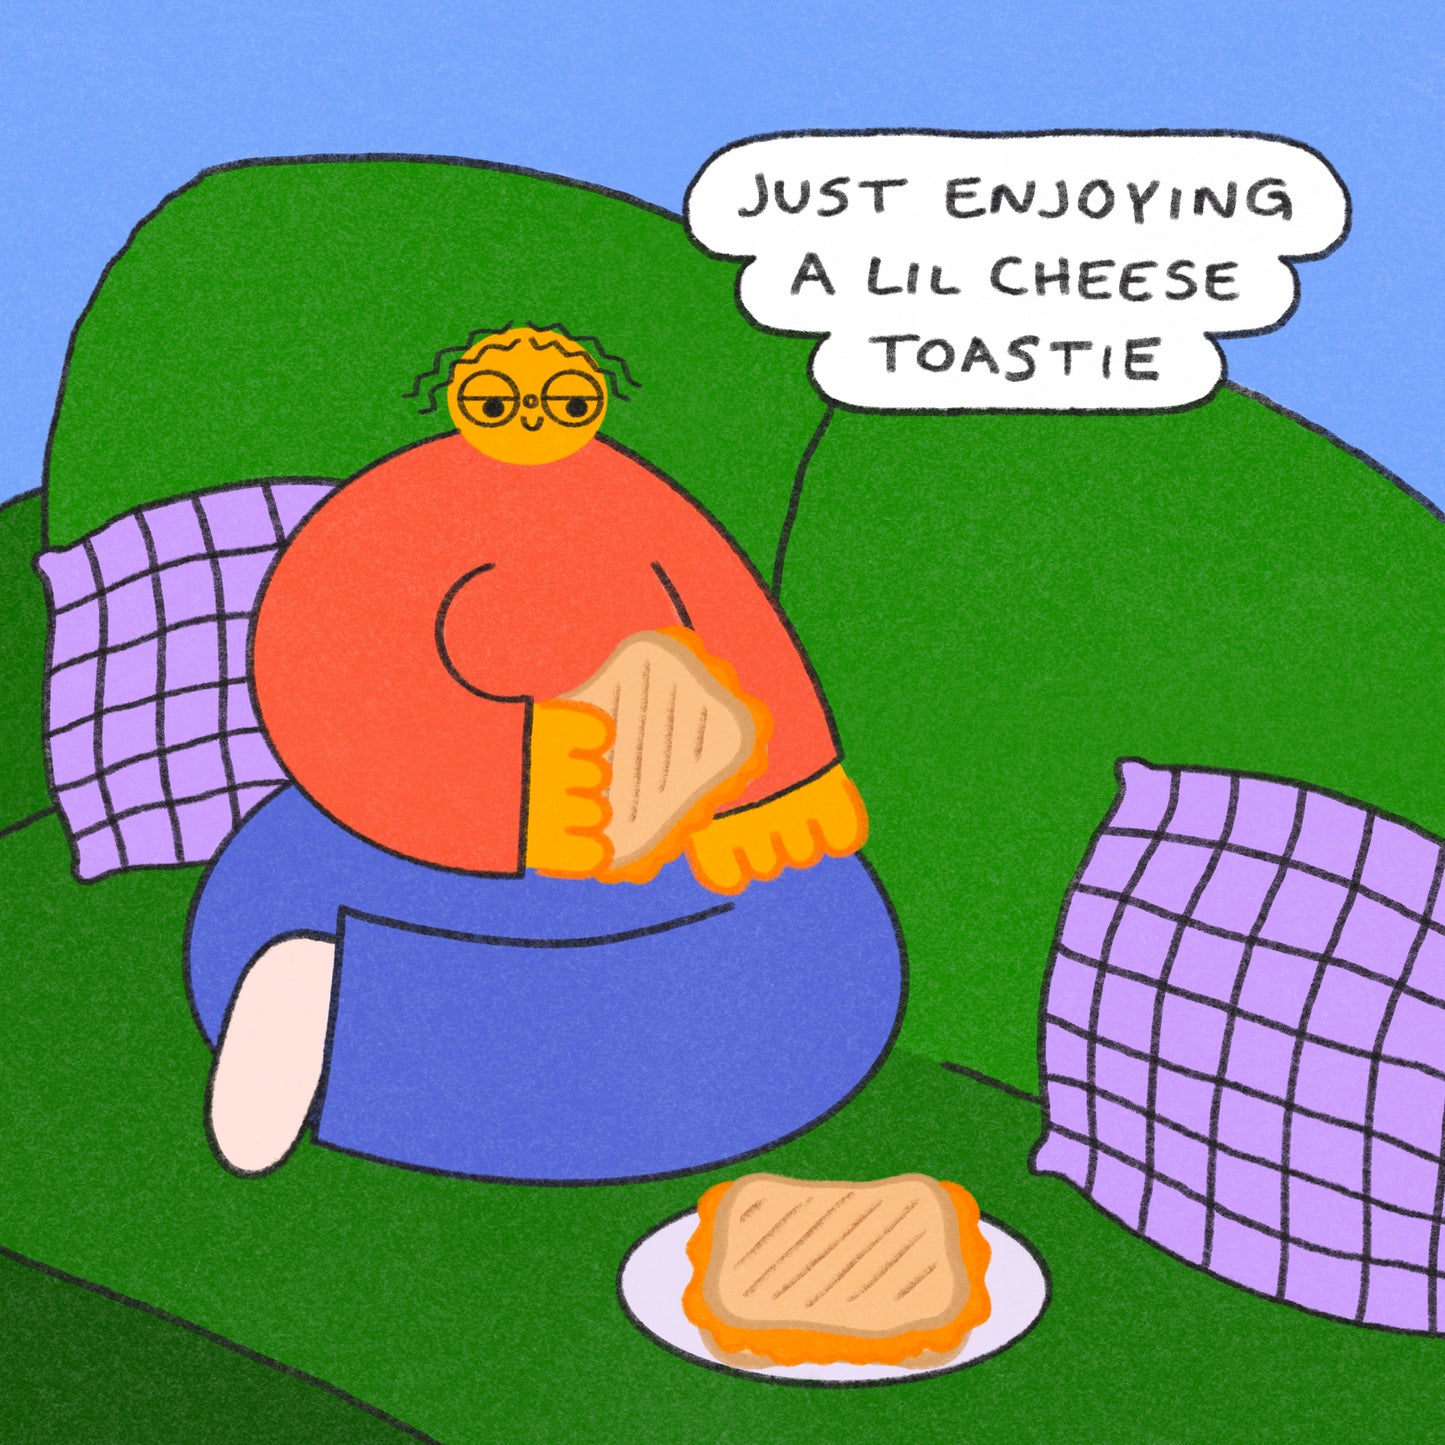 Cheese Toastie